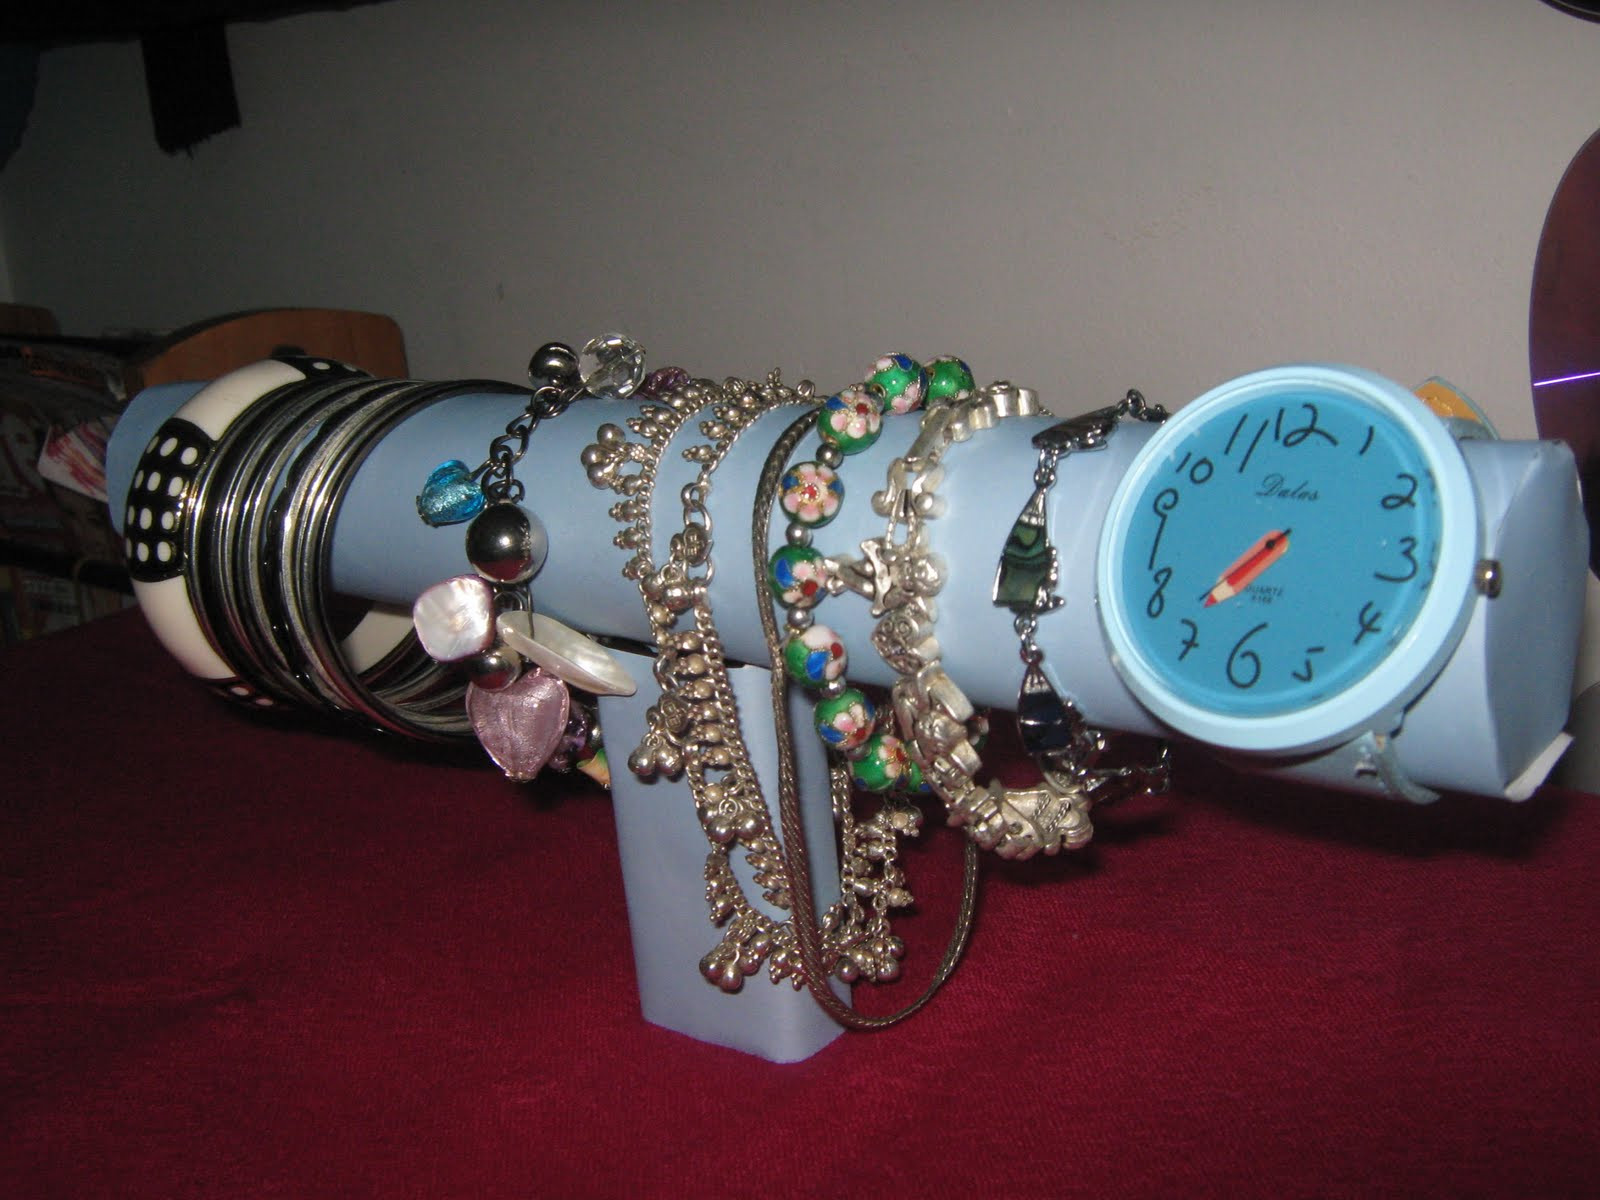 Best ideas about DIY Bracelet Holders
. Save or Pin Fashion to DIY for DIY bracelet holder Now.